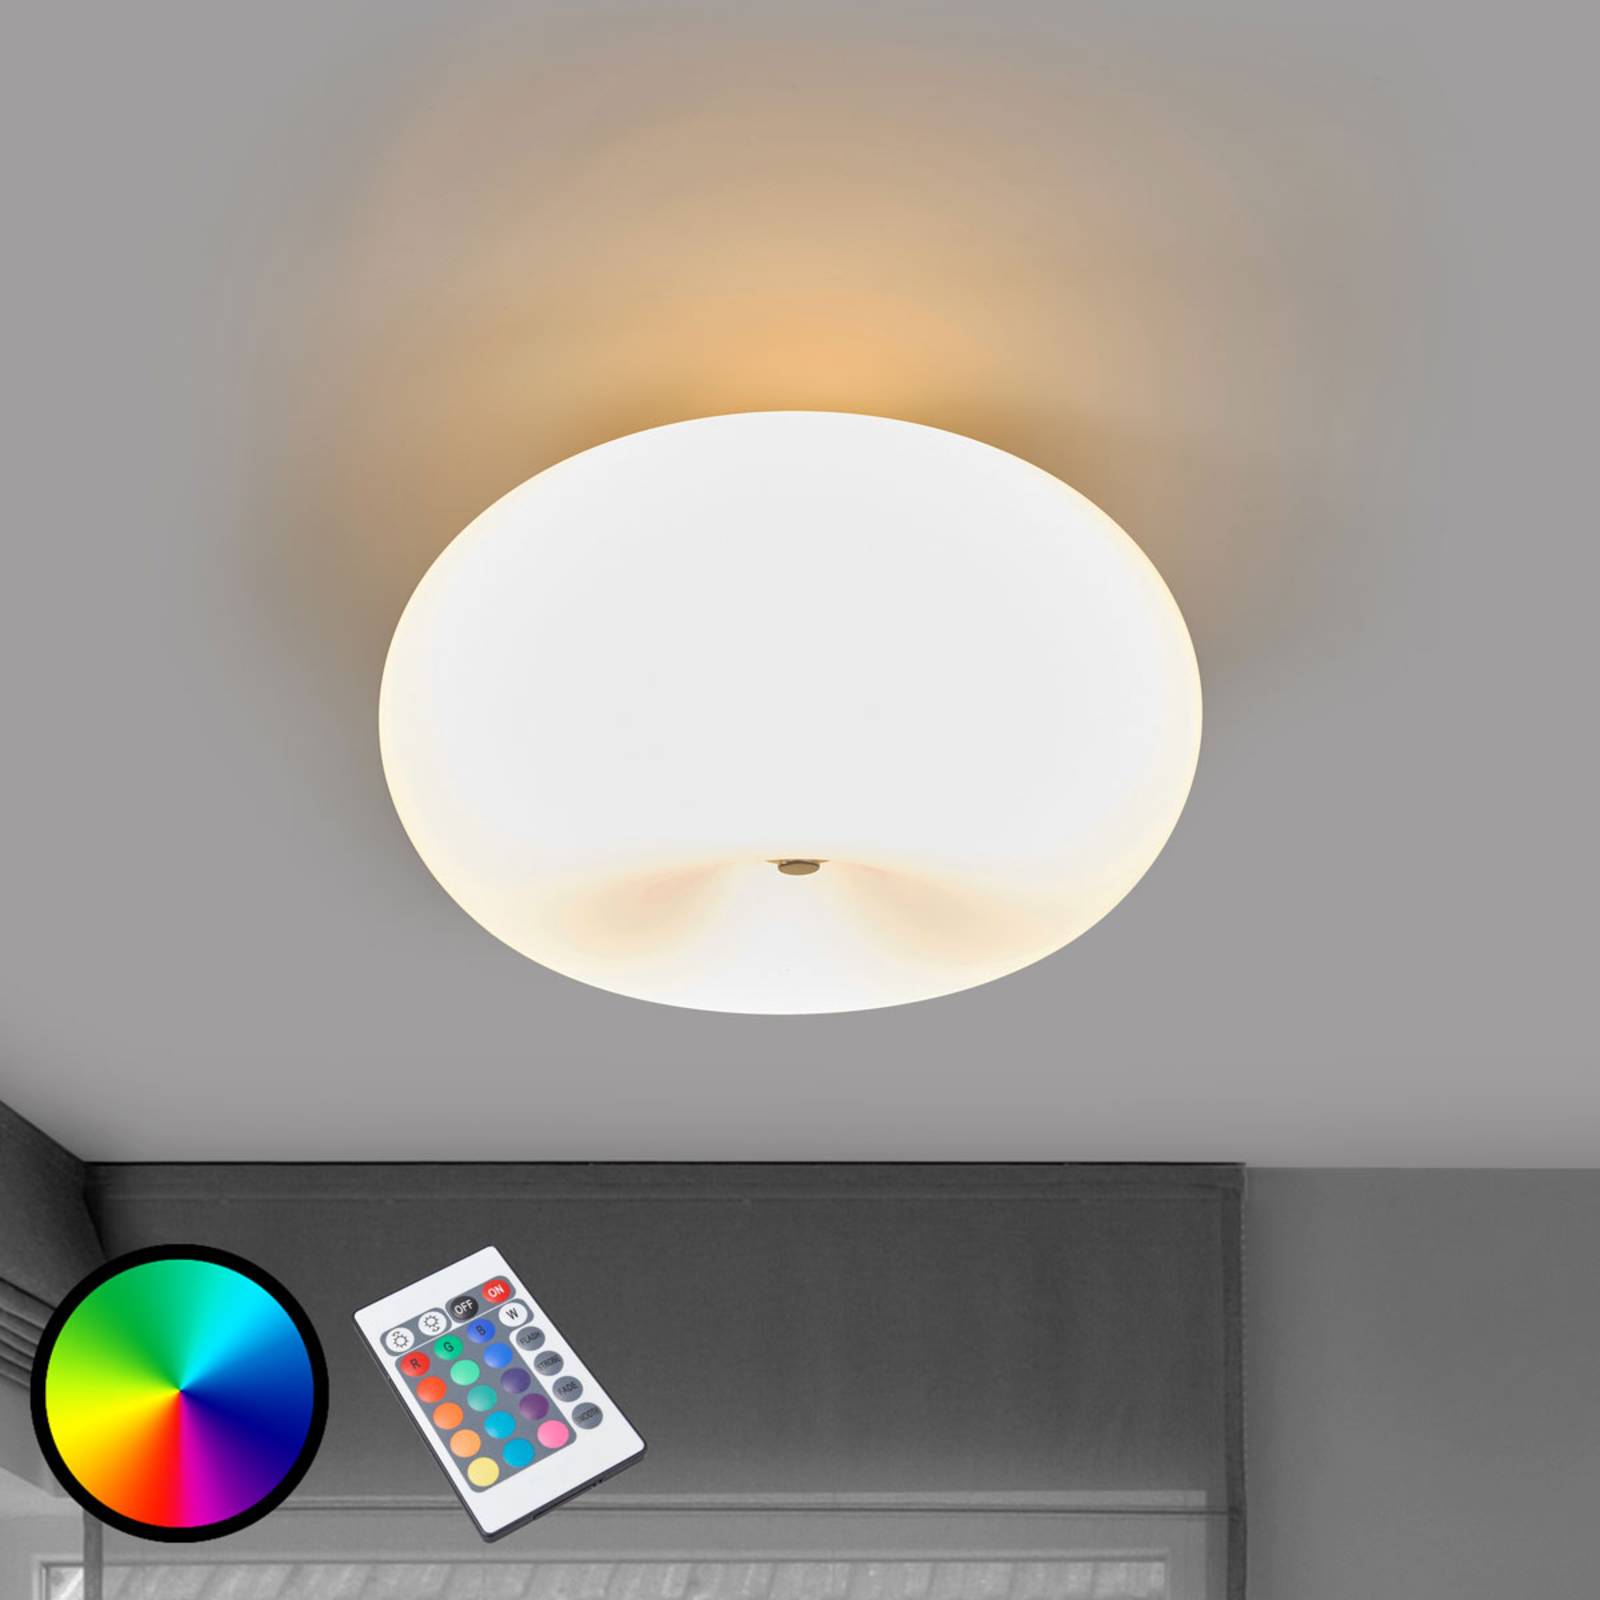 LED-plafondlamp Optica-C RGBW met afstandsbed.